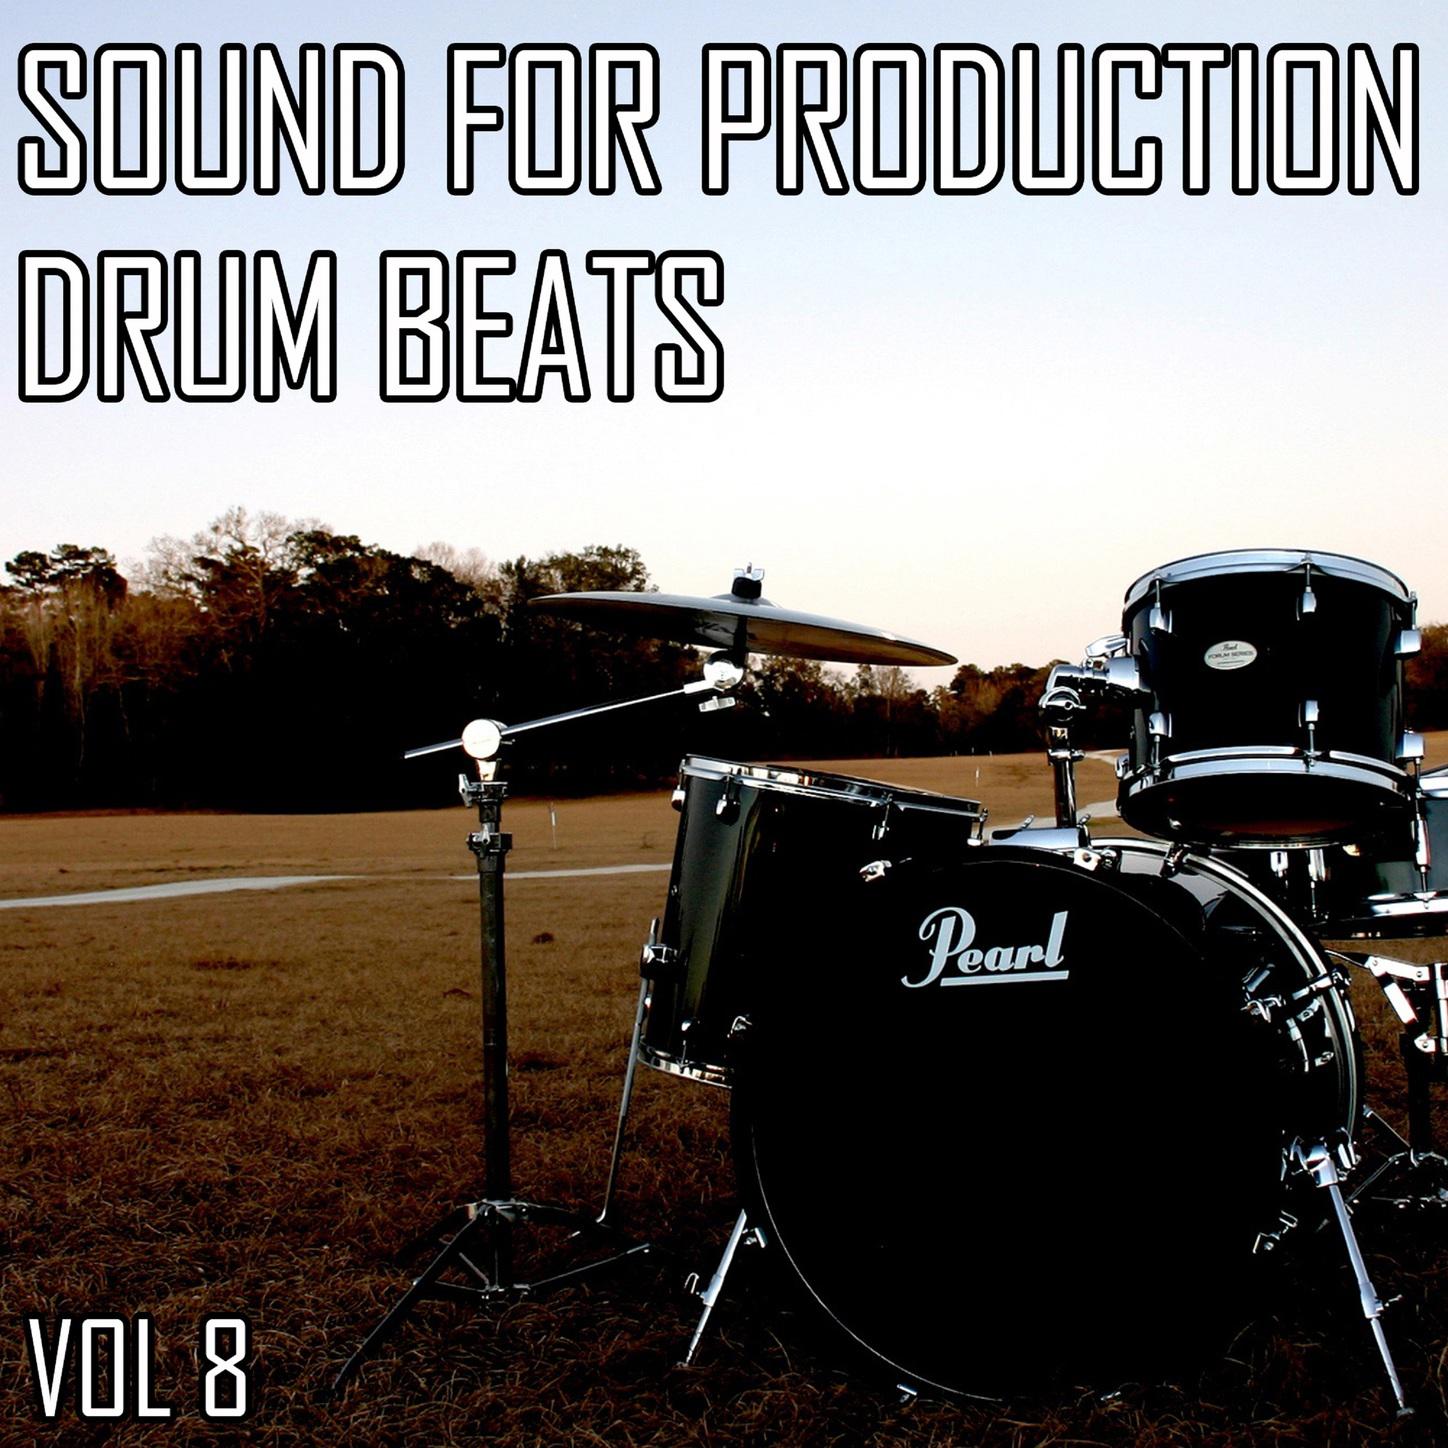 Sound For Production Drum Beats, Vol. 8